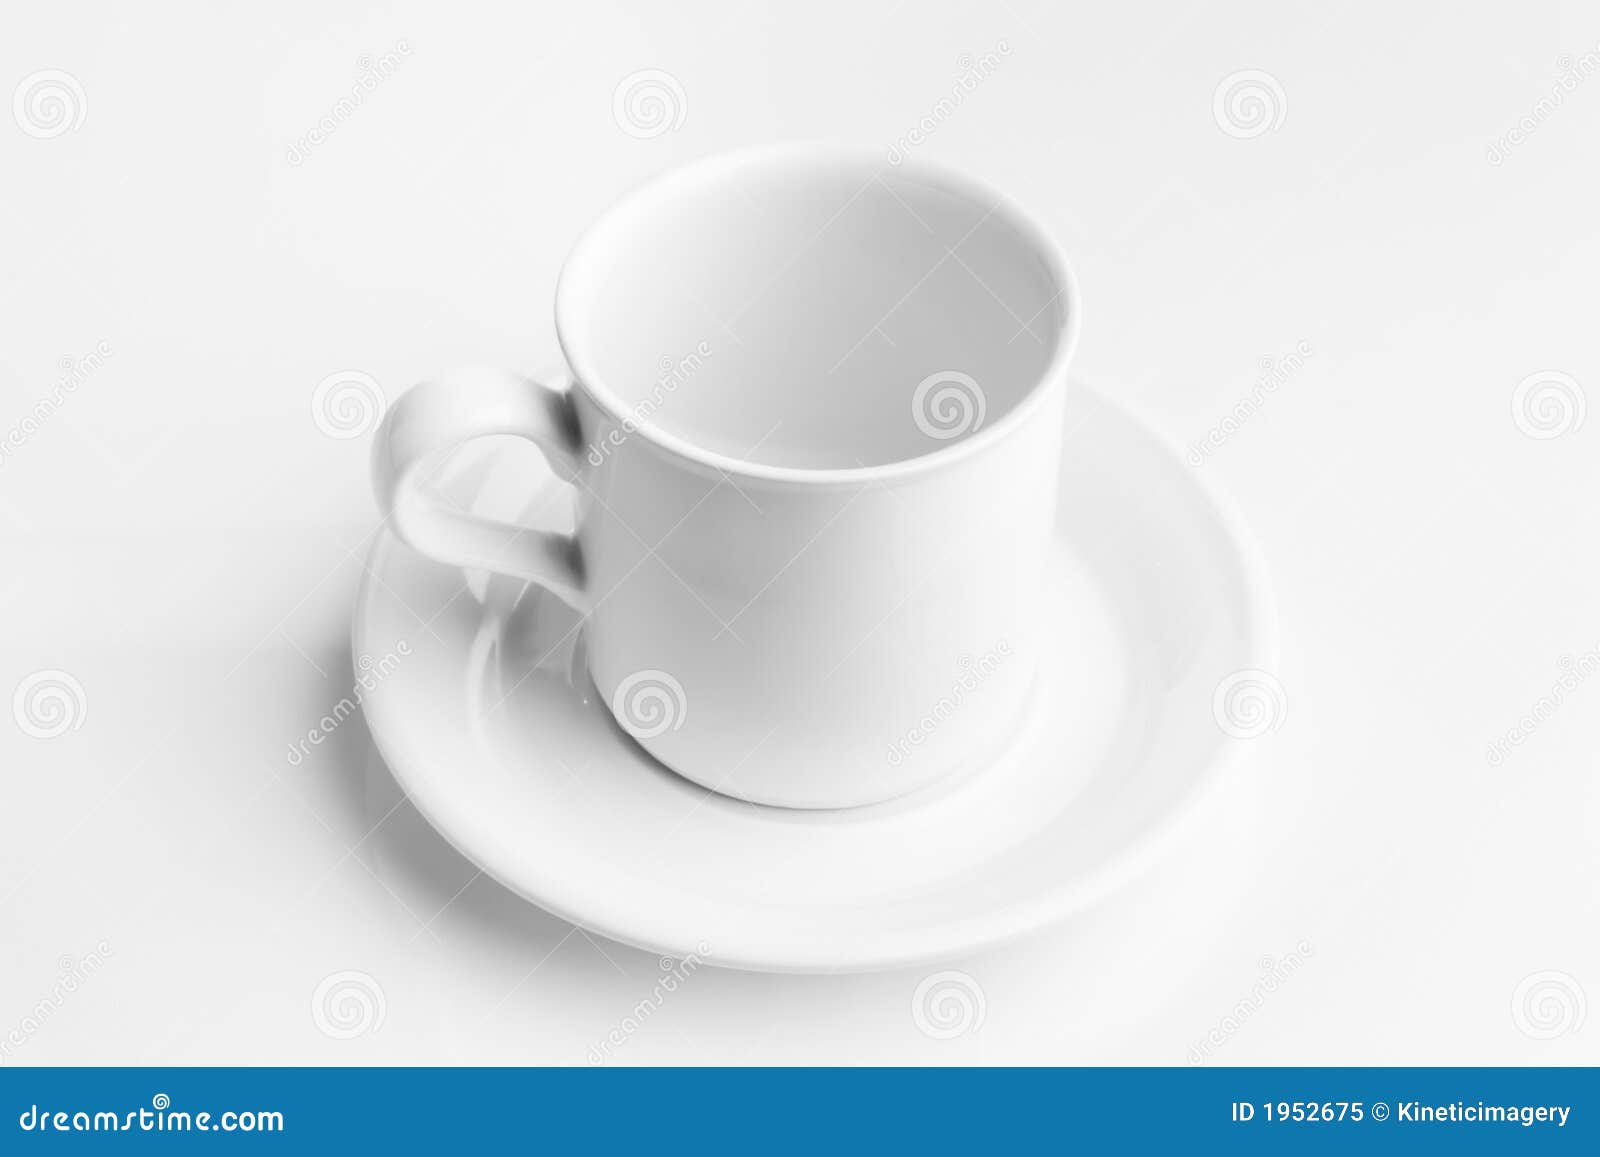 Empty Coffee Cup Royalty-Free Stock Photography | CartoonDealer.com ...